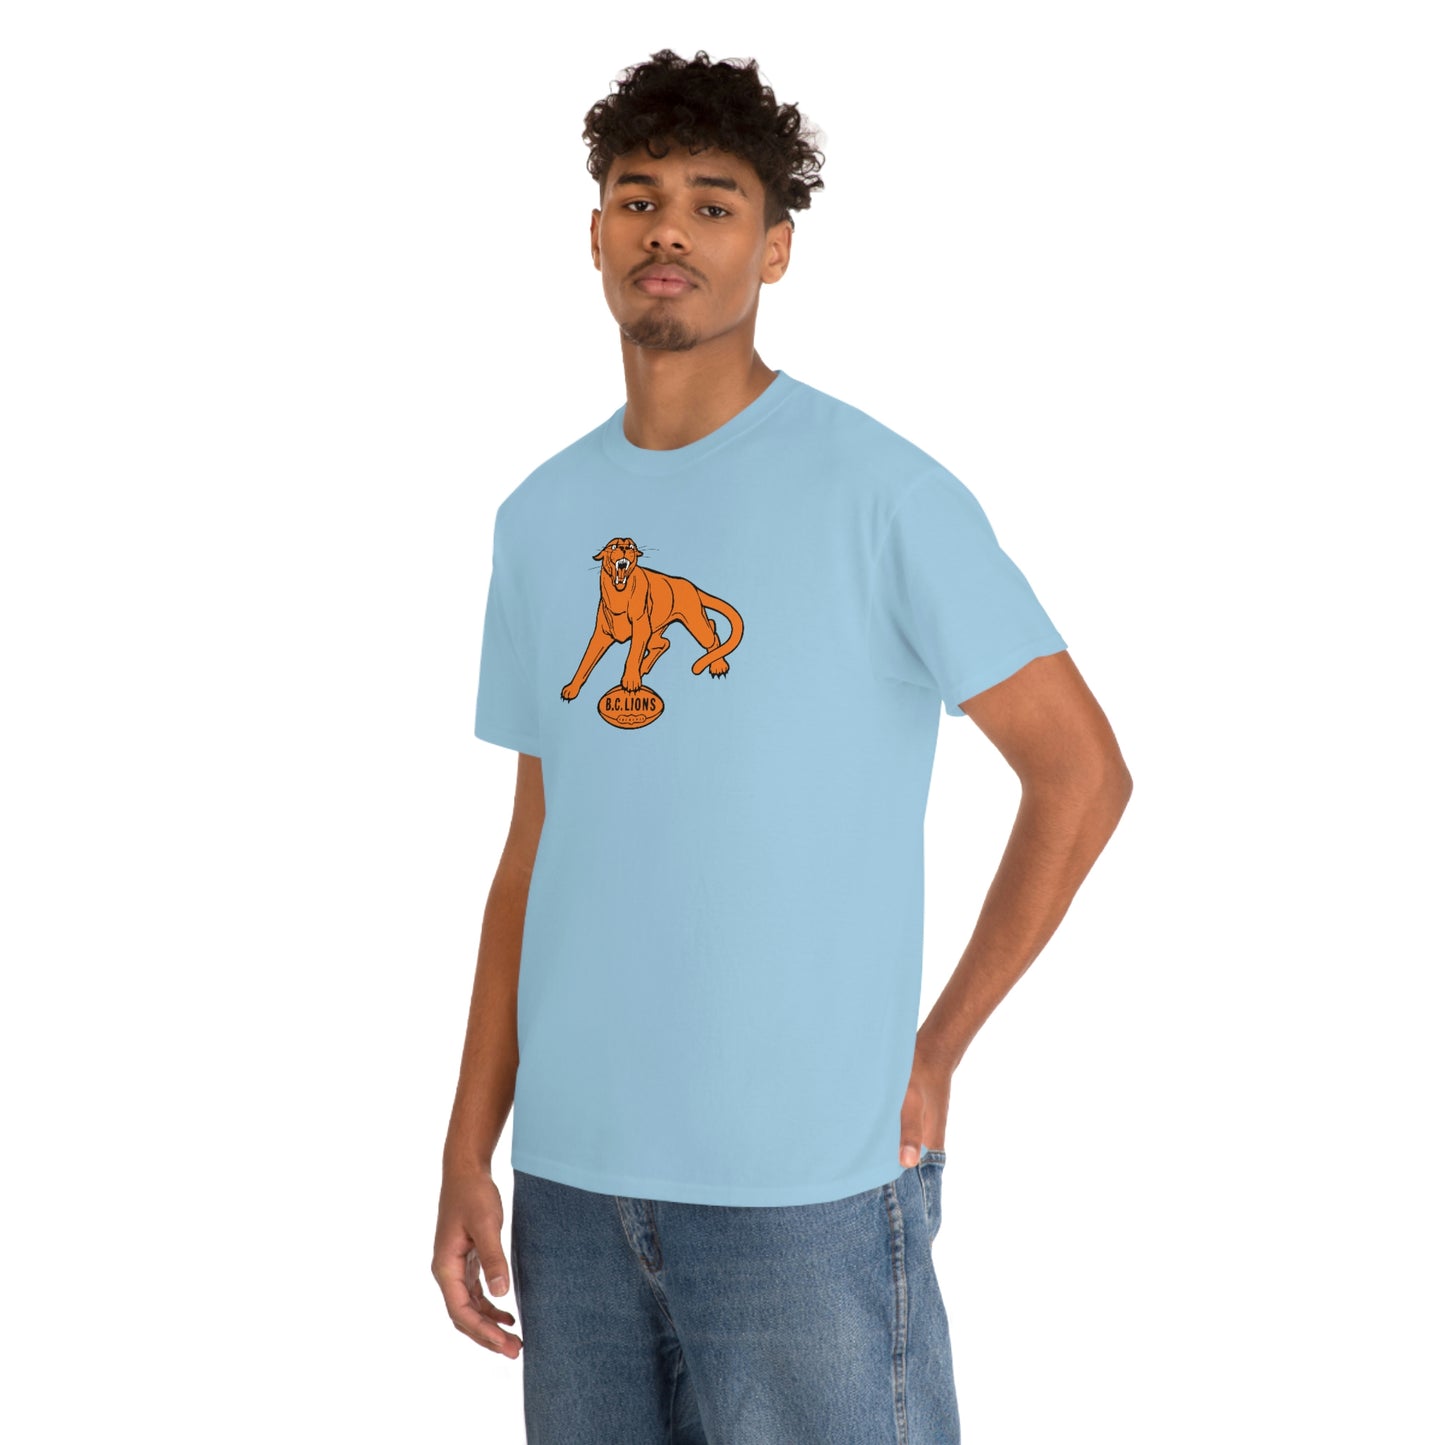 B.C. Lions T-Shirt